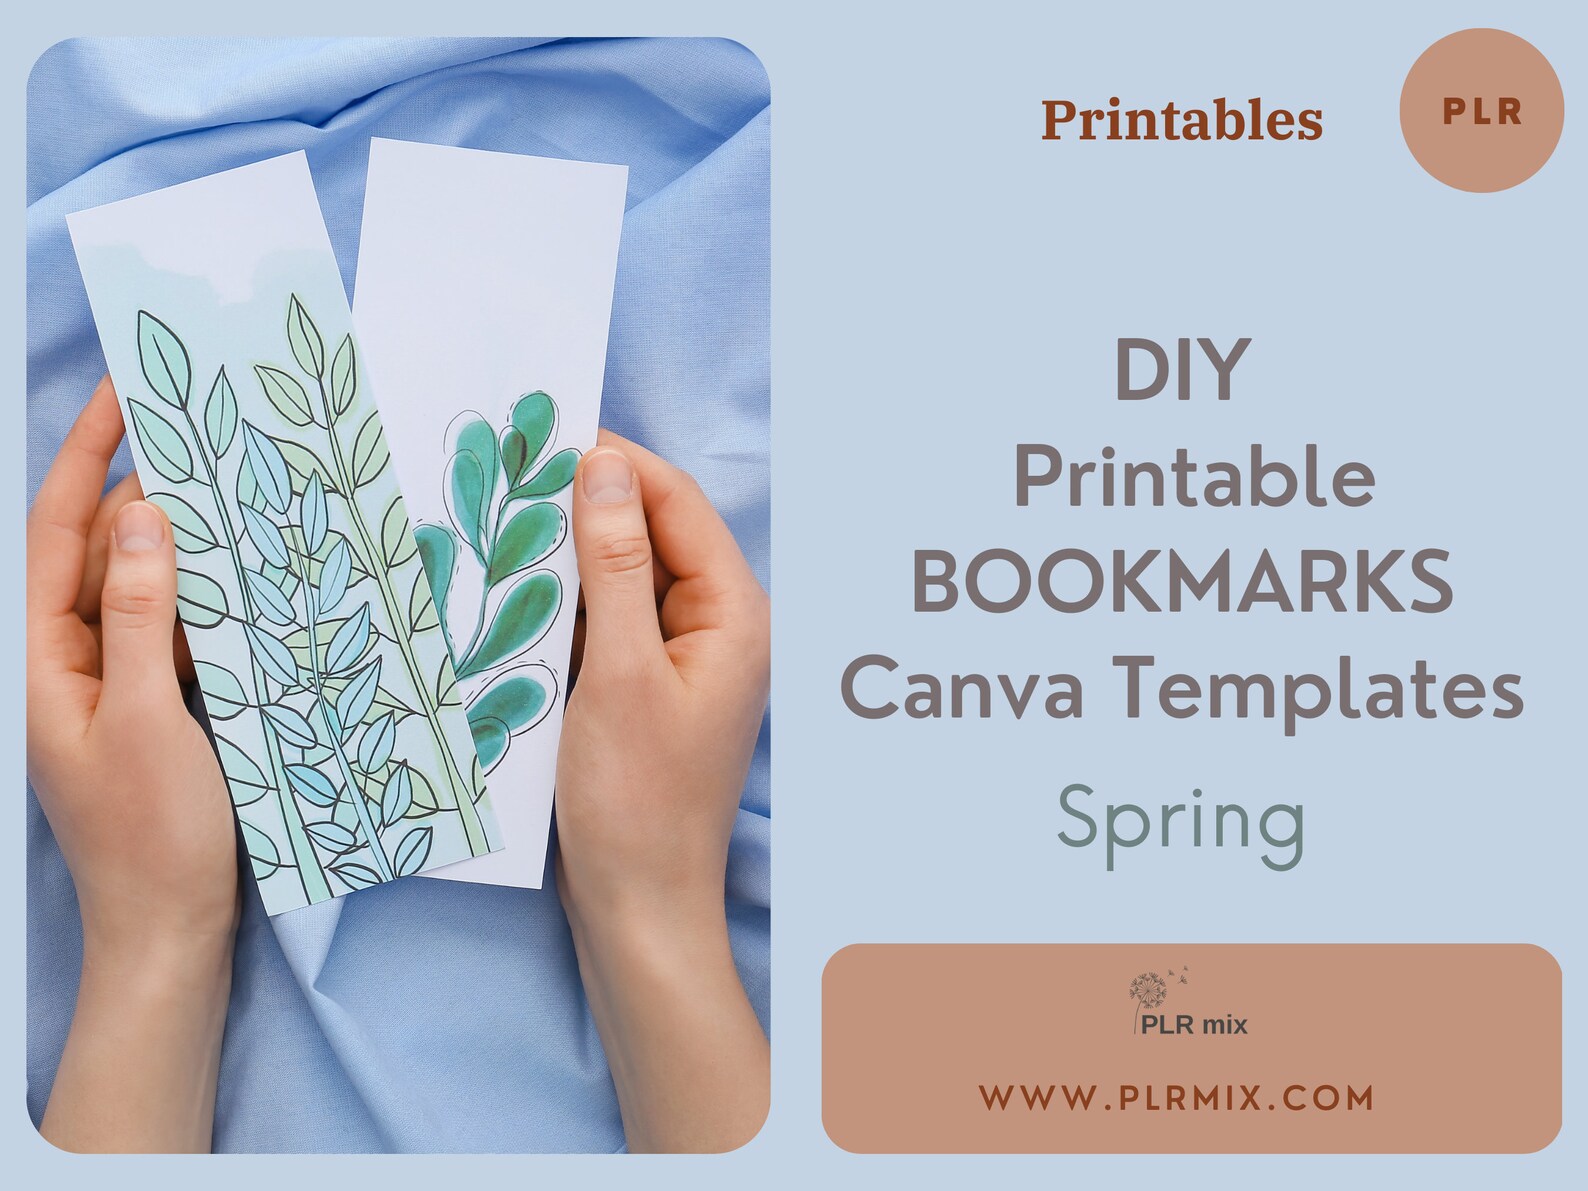 diy-printable-bookmarks-spring-bookmarks-canva-templates-bookmarks